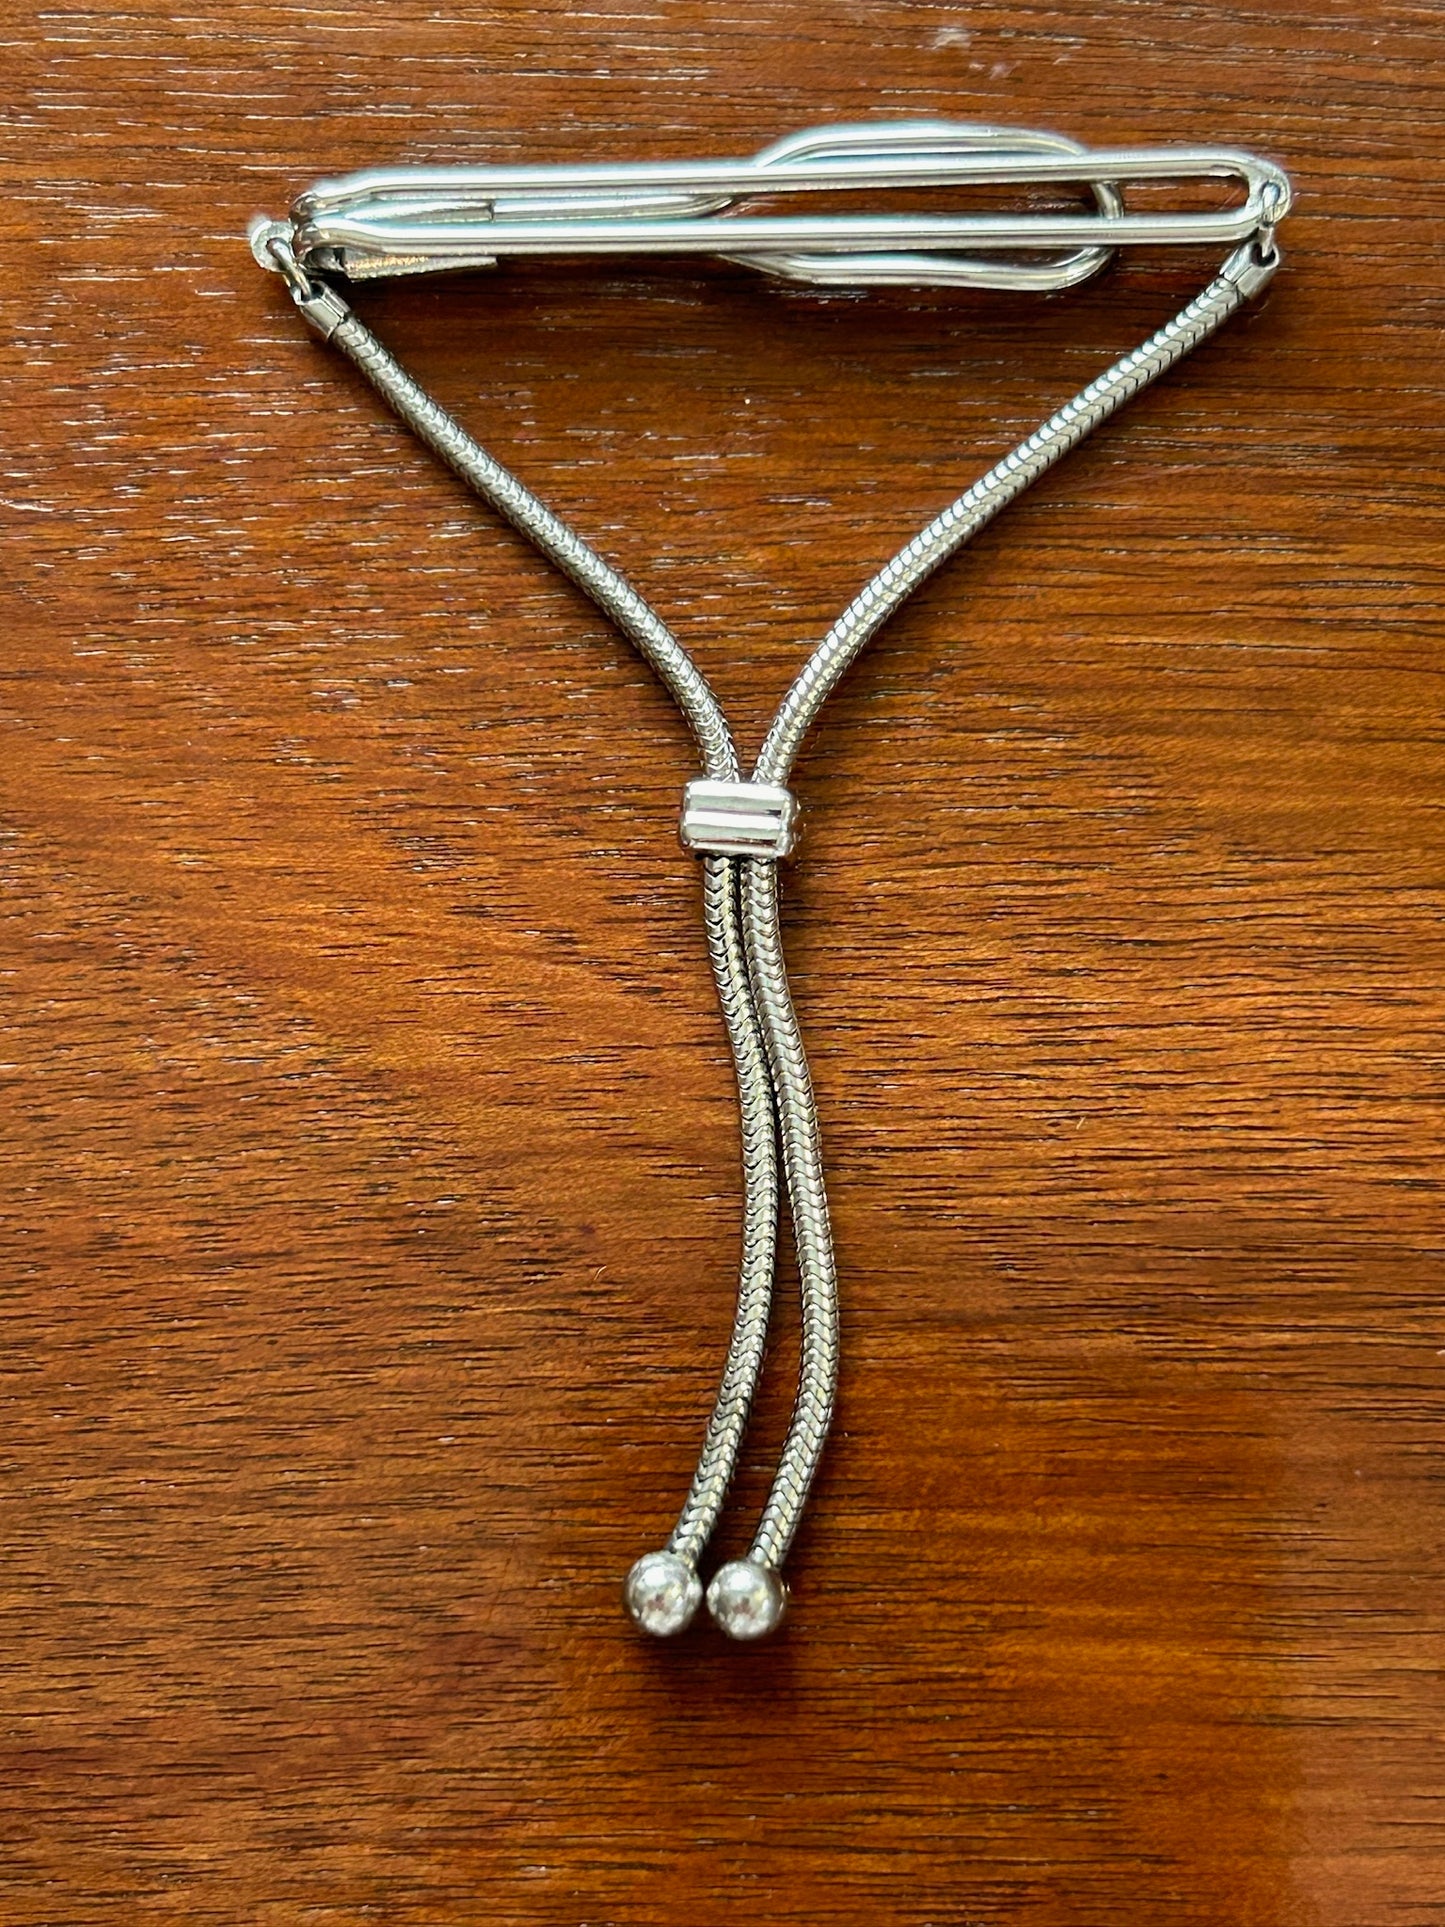 Vintage Midcentury MCM Swank Silver Tone Tie Bar Clip with Chain Tassel